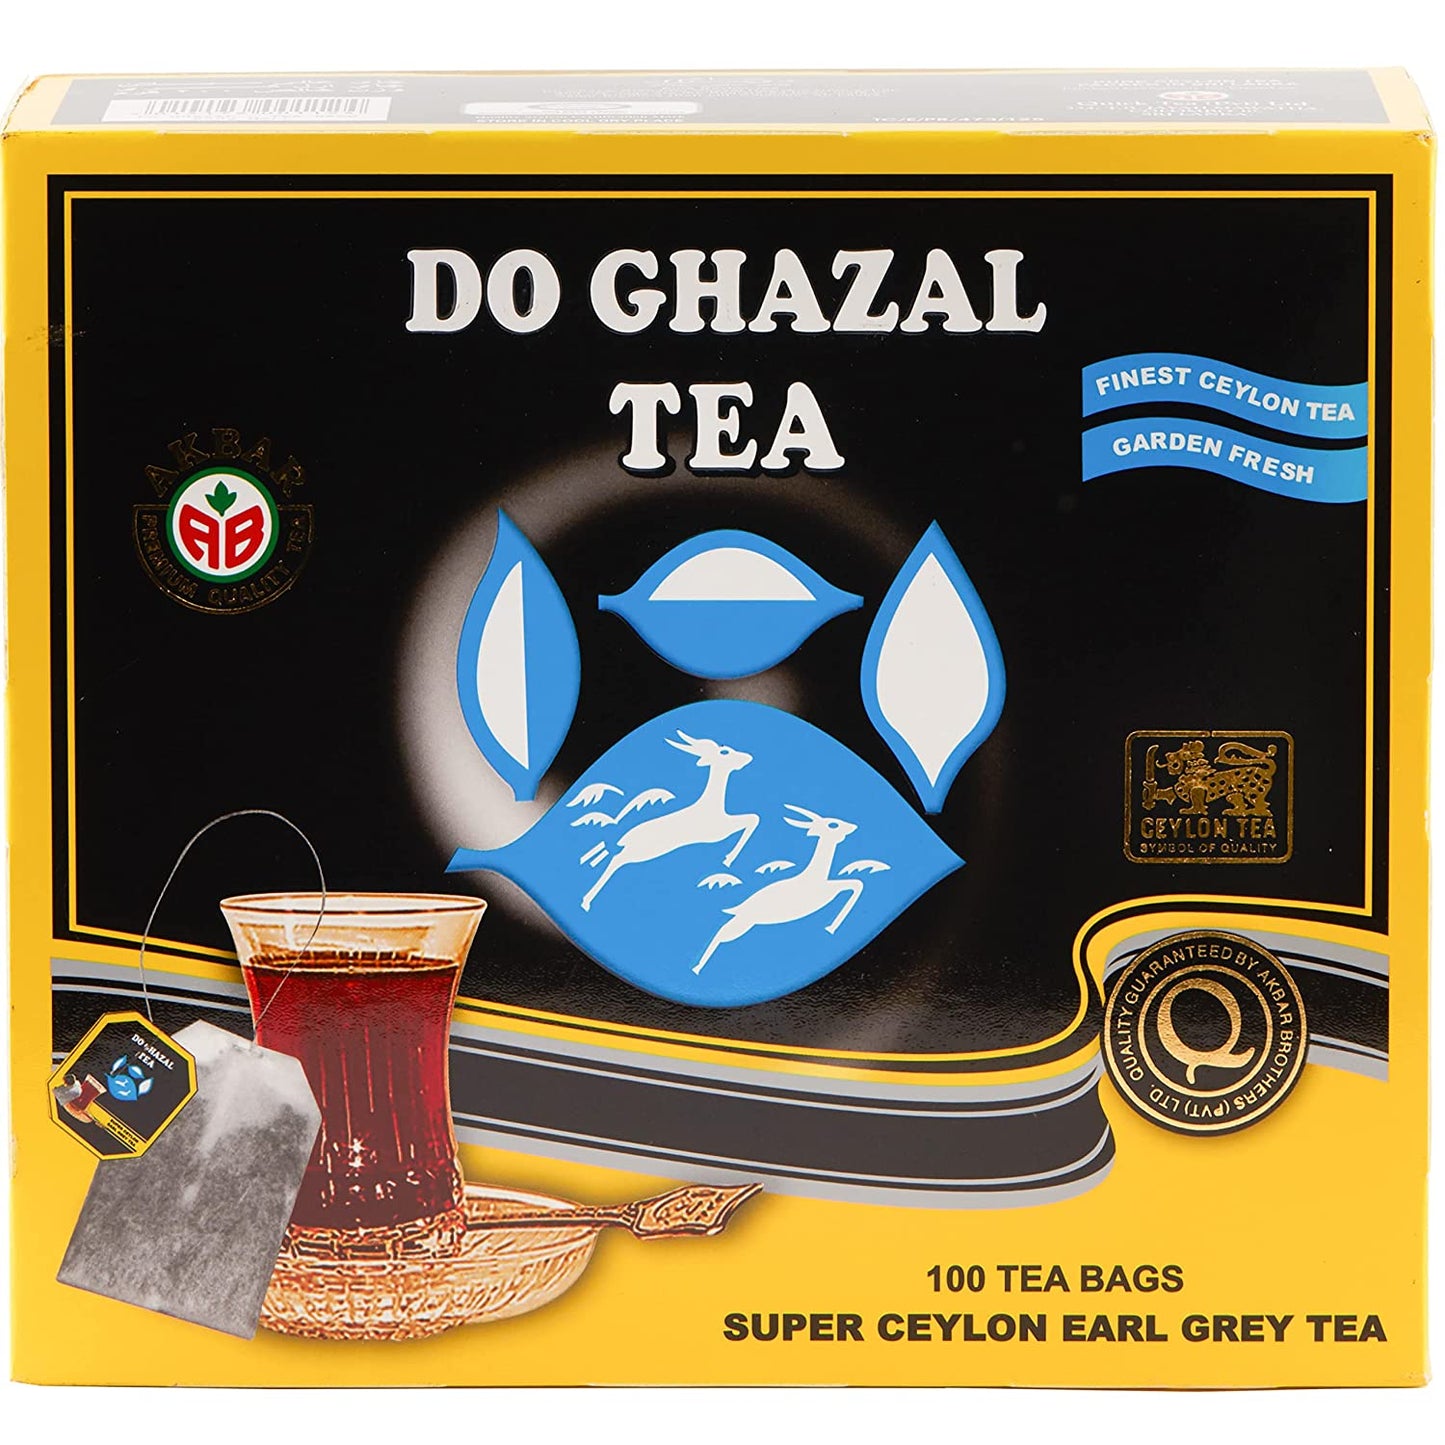 Do Ghazal Tea - Earl Grey Tea (100 bags) - 500g